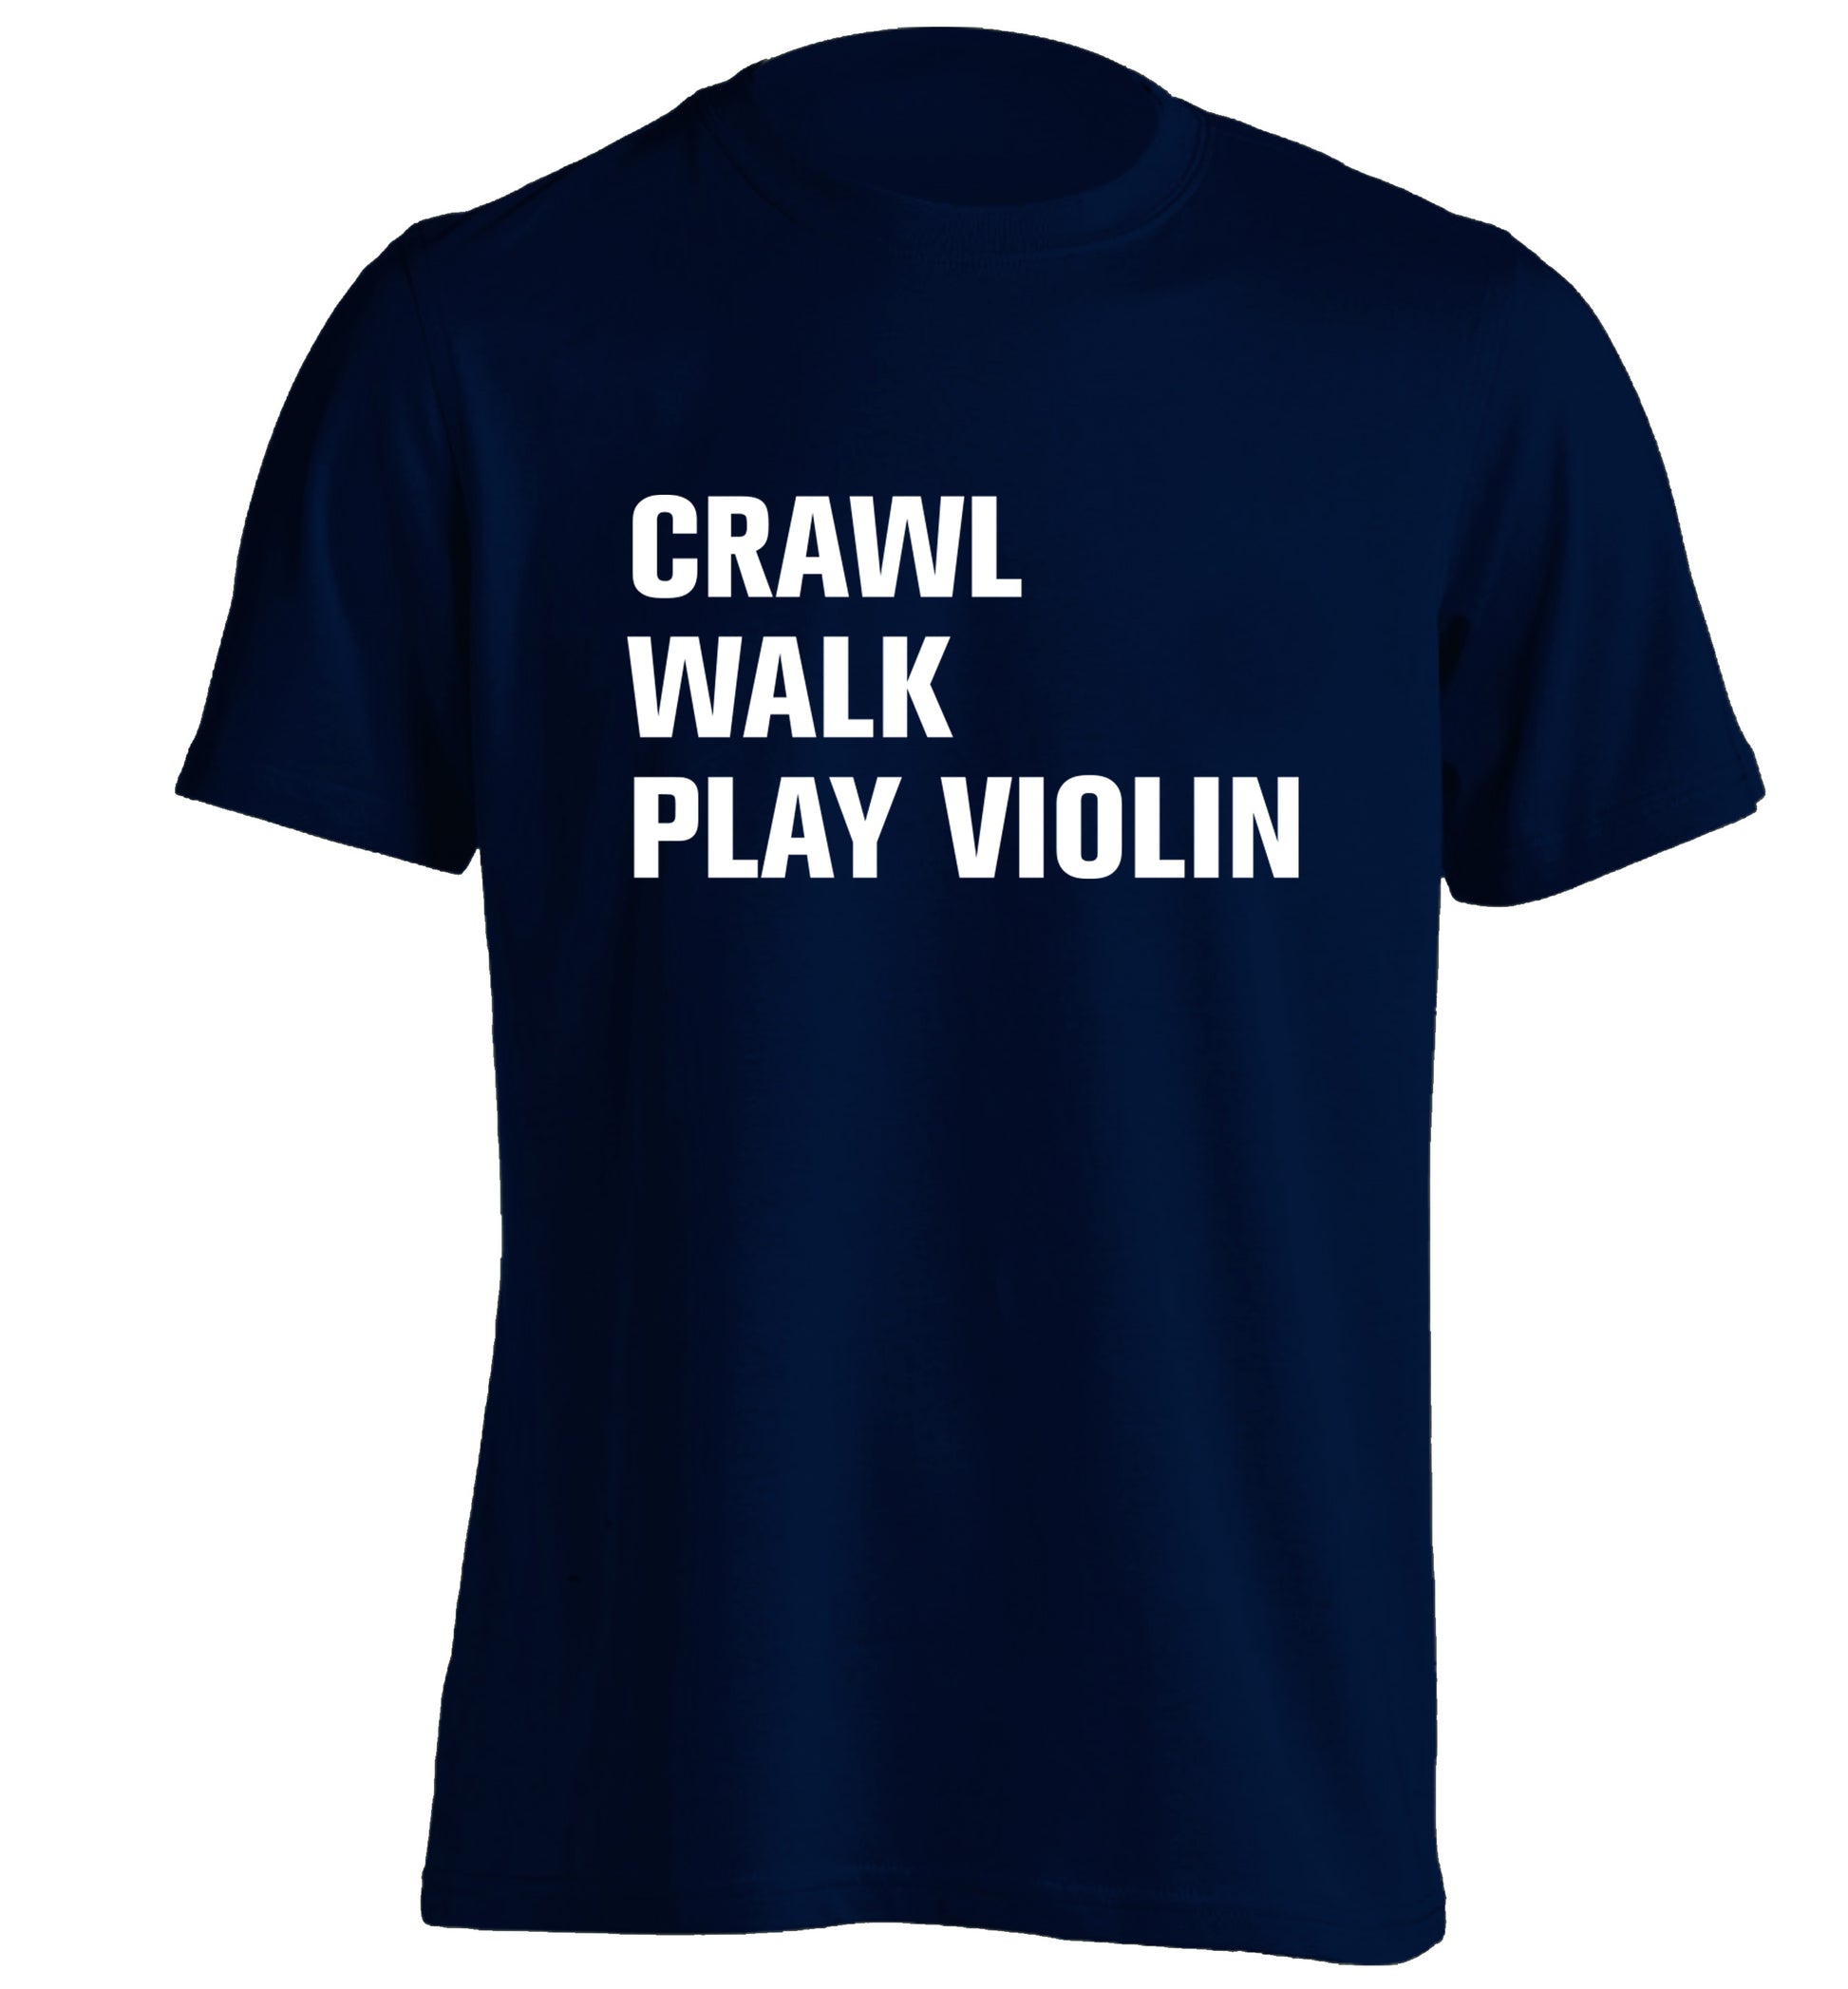 Crawl Walk Play Violin adults unisex navy Tshirt 2XL